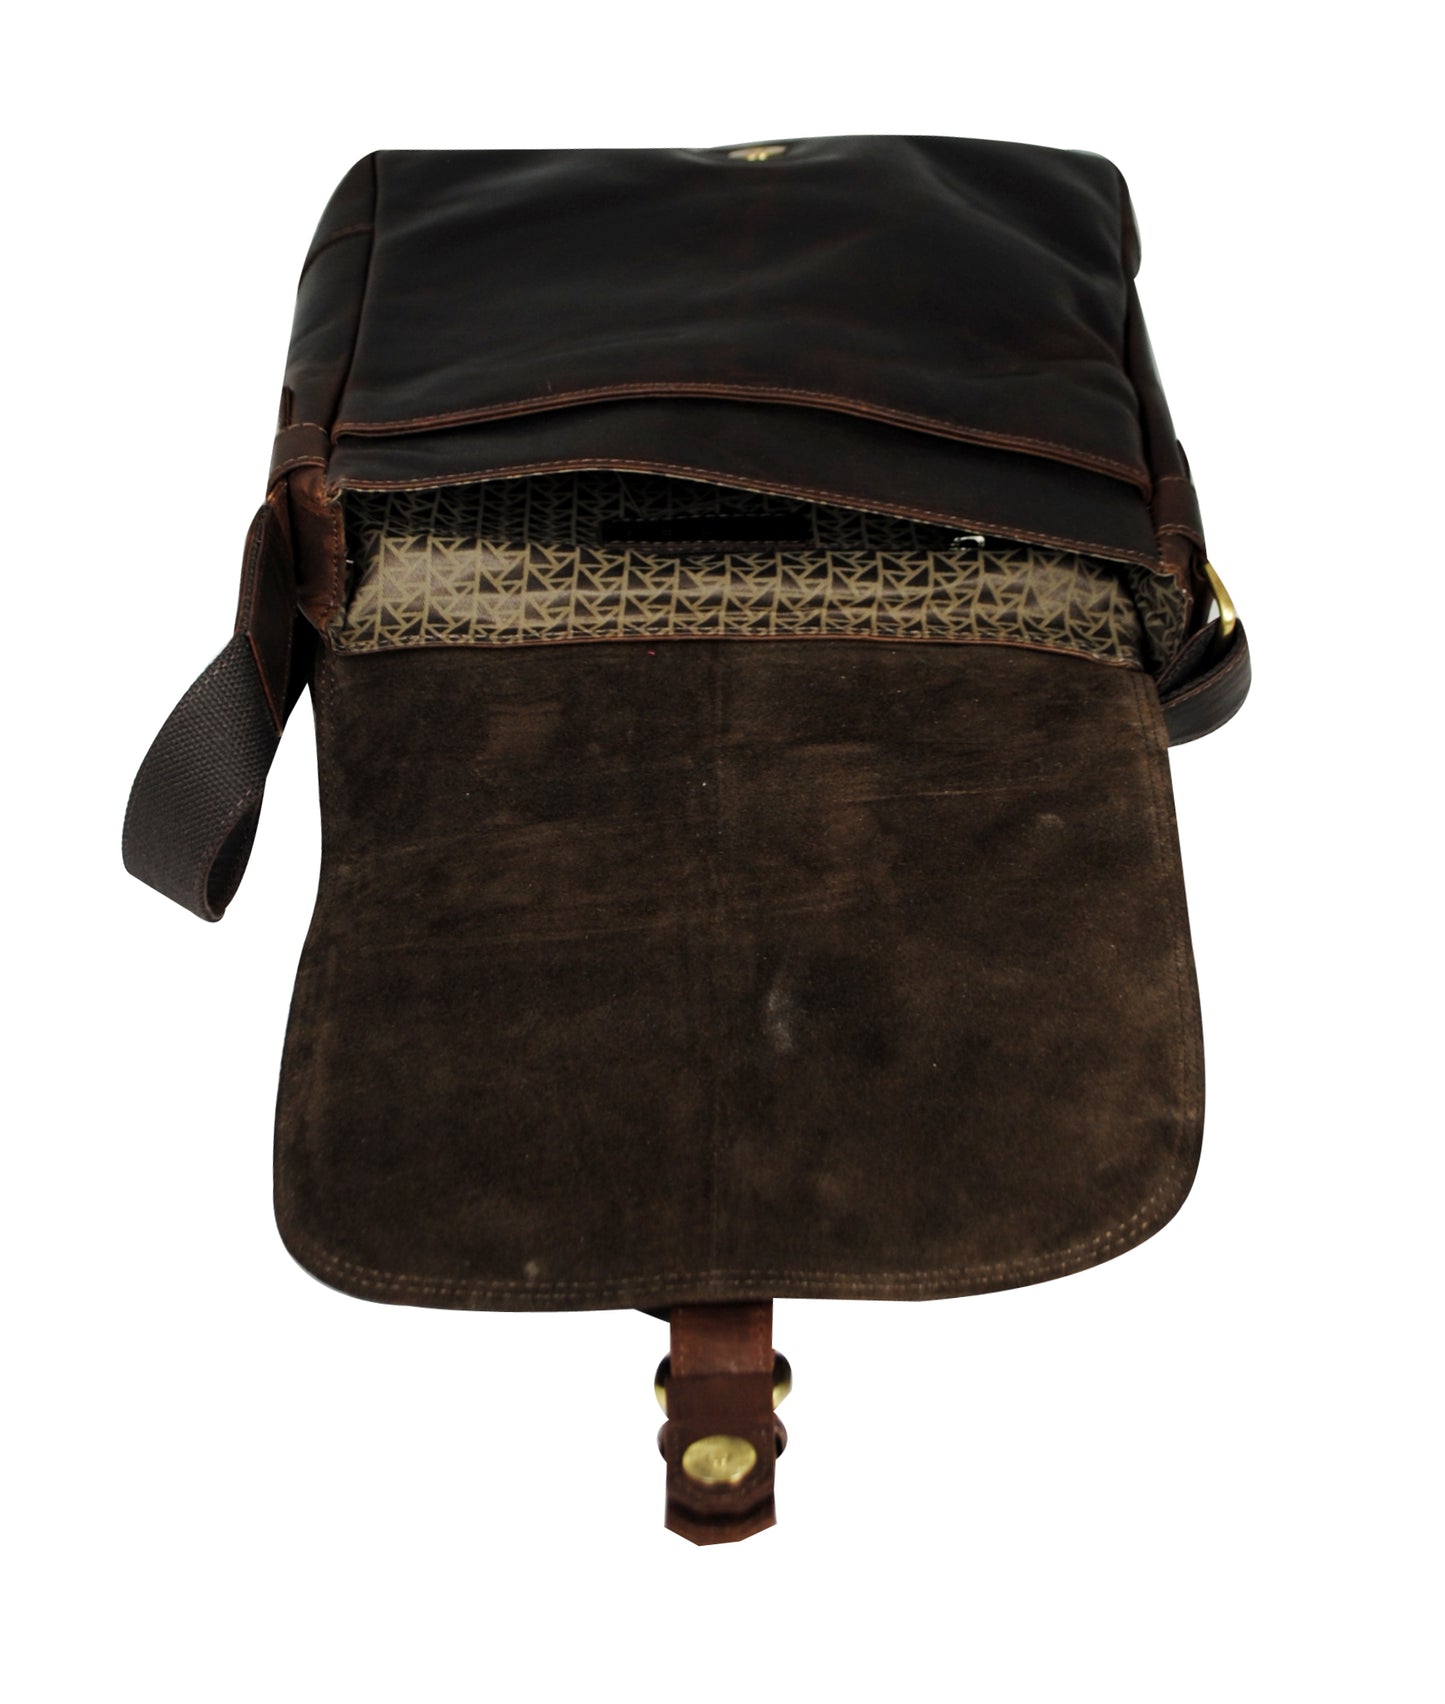 Calfnero Genuine Leather Men's Cross Body Bag (804-Brown)